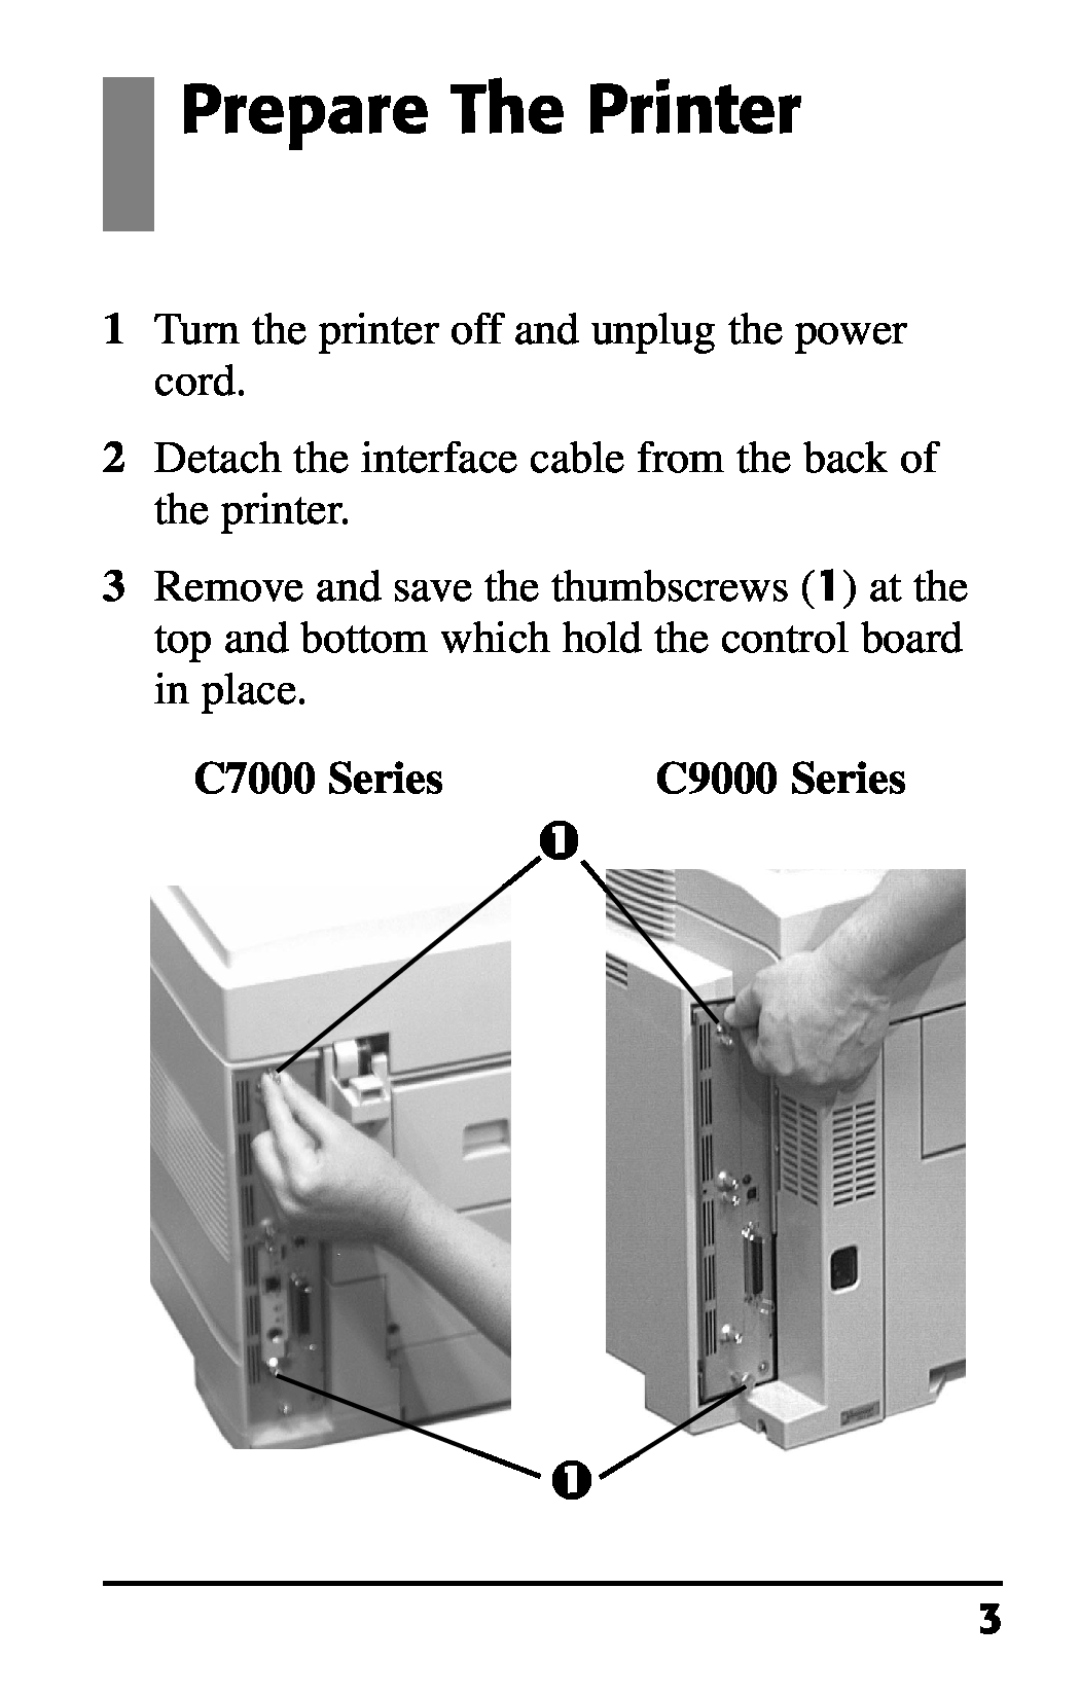 Oki 70037301 Prepare The Printer, Turn the printer off and unplug the power cord, C7000 Series, C9000 Series 